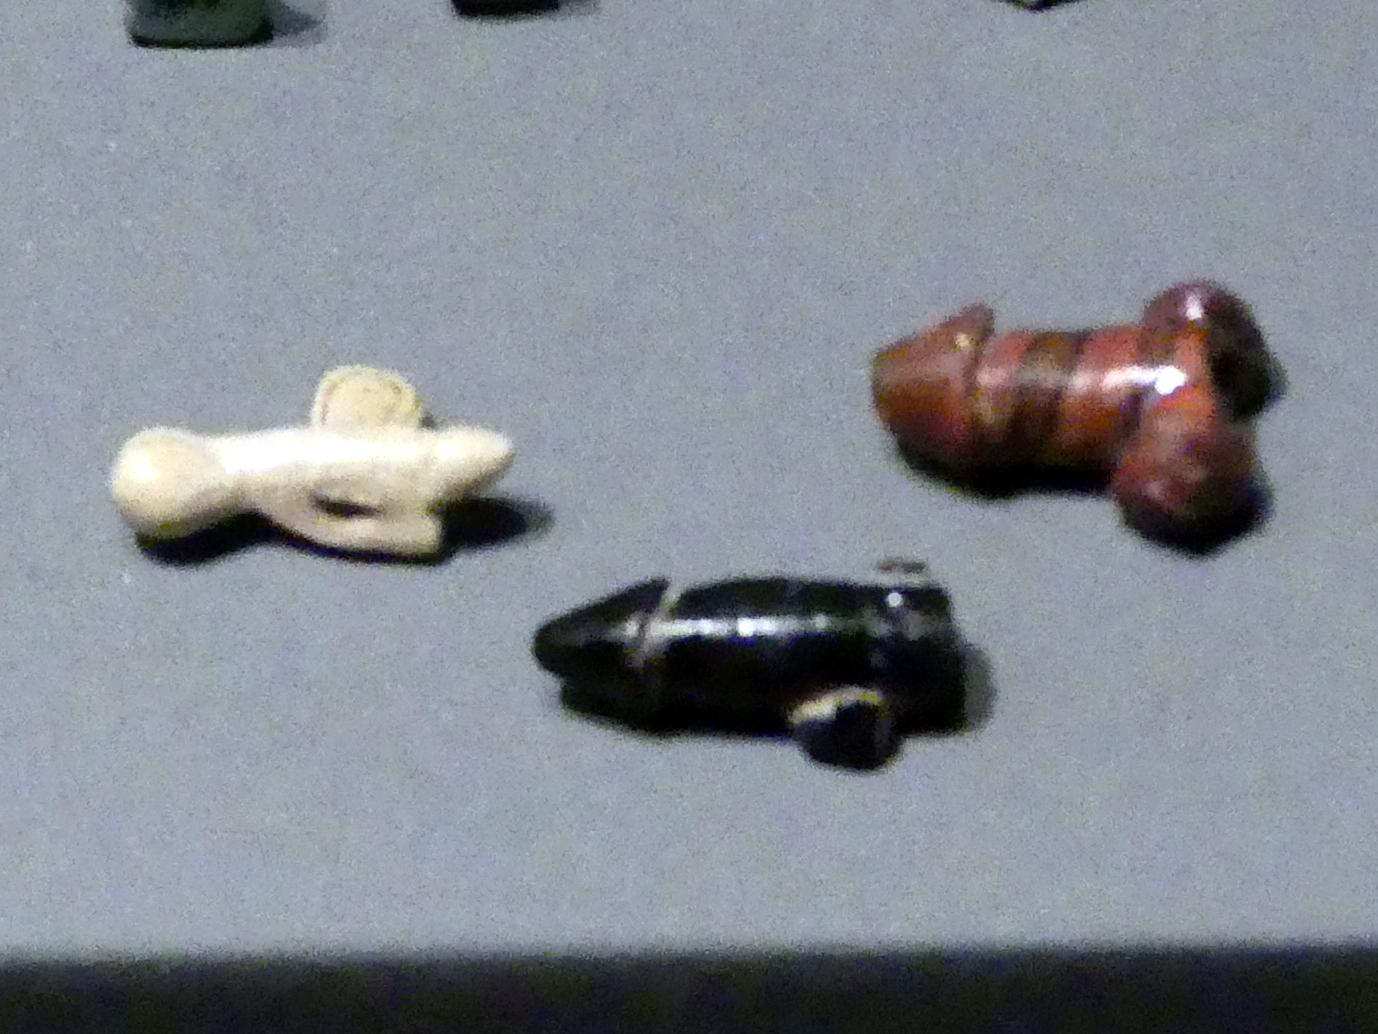 Phallus-Amulette, 3100 - 300 v. Chr., Bild 1/2